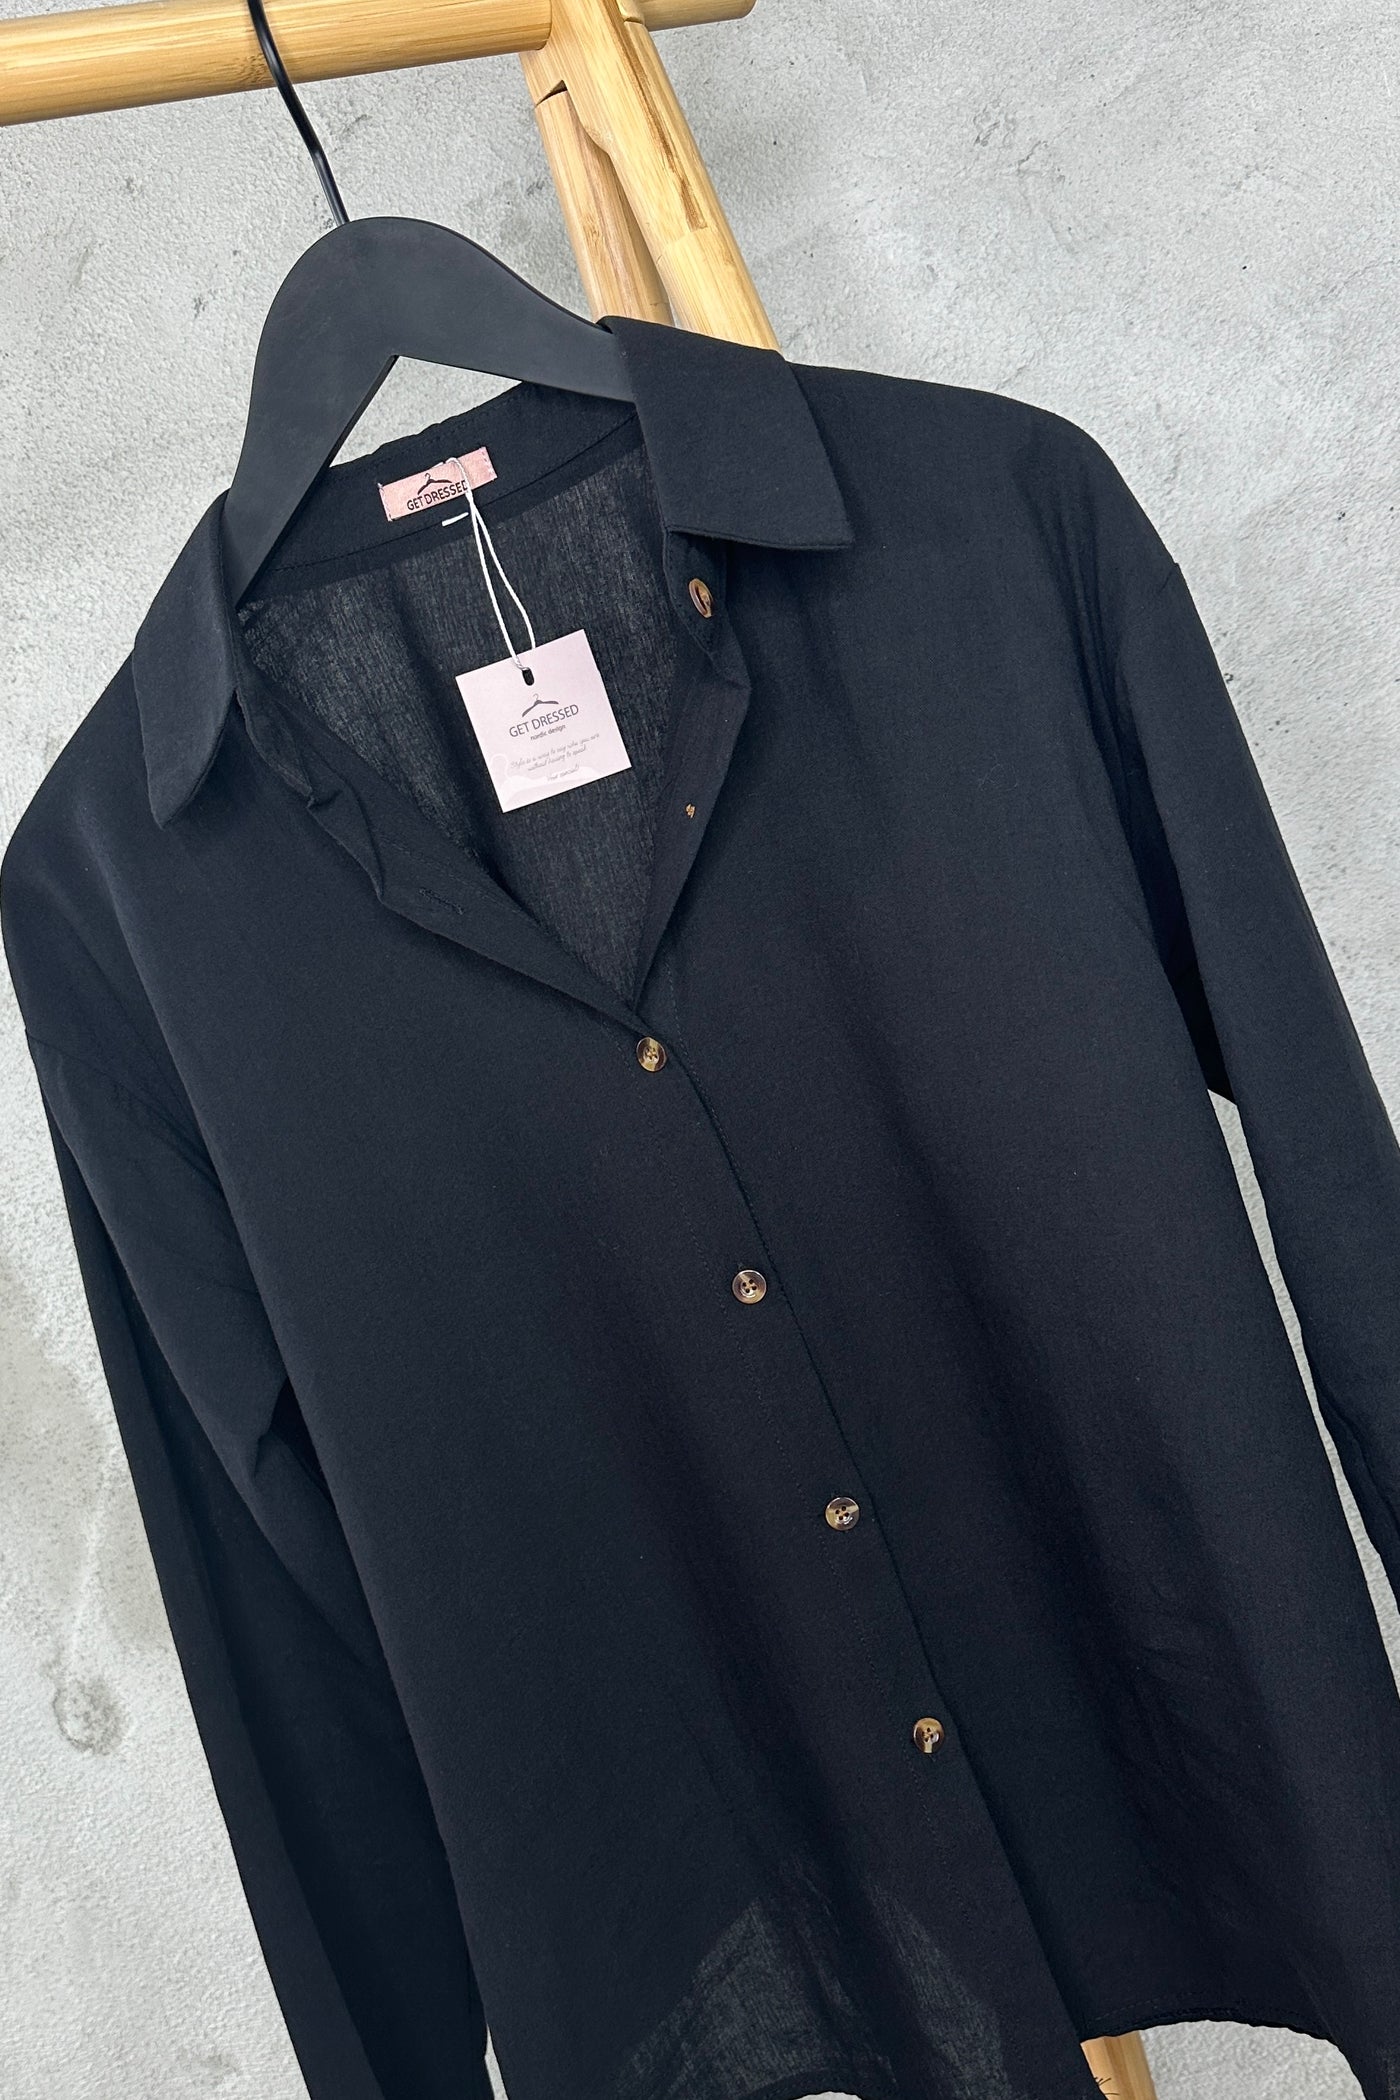 Clara Shirt Black - Get Dressed